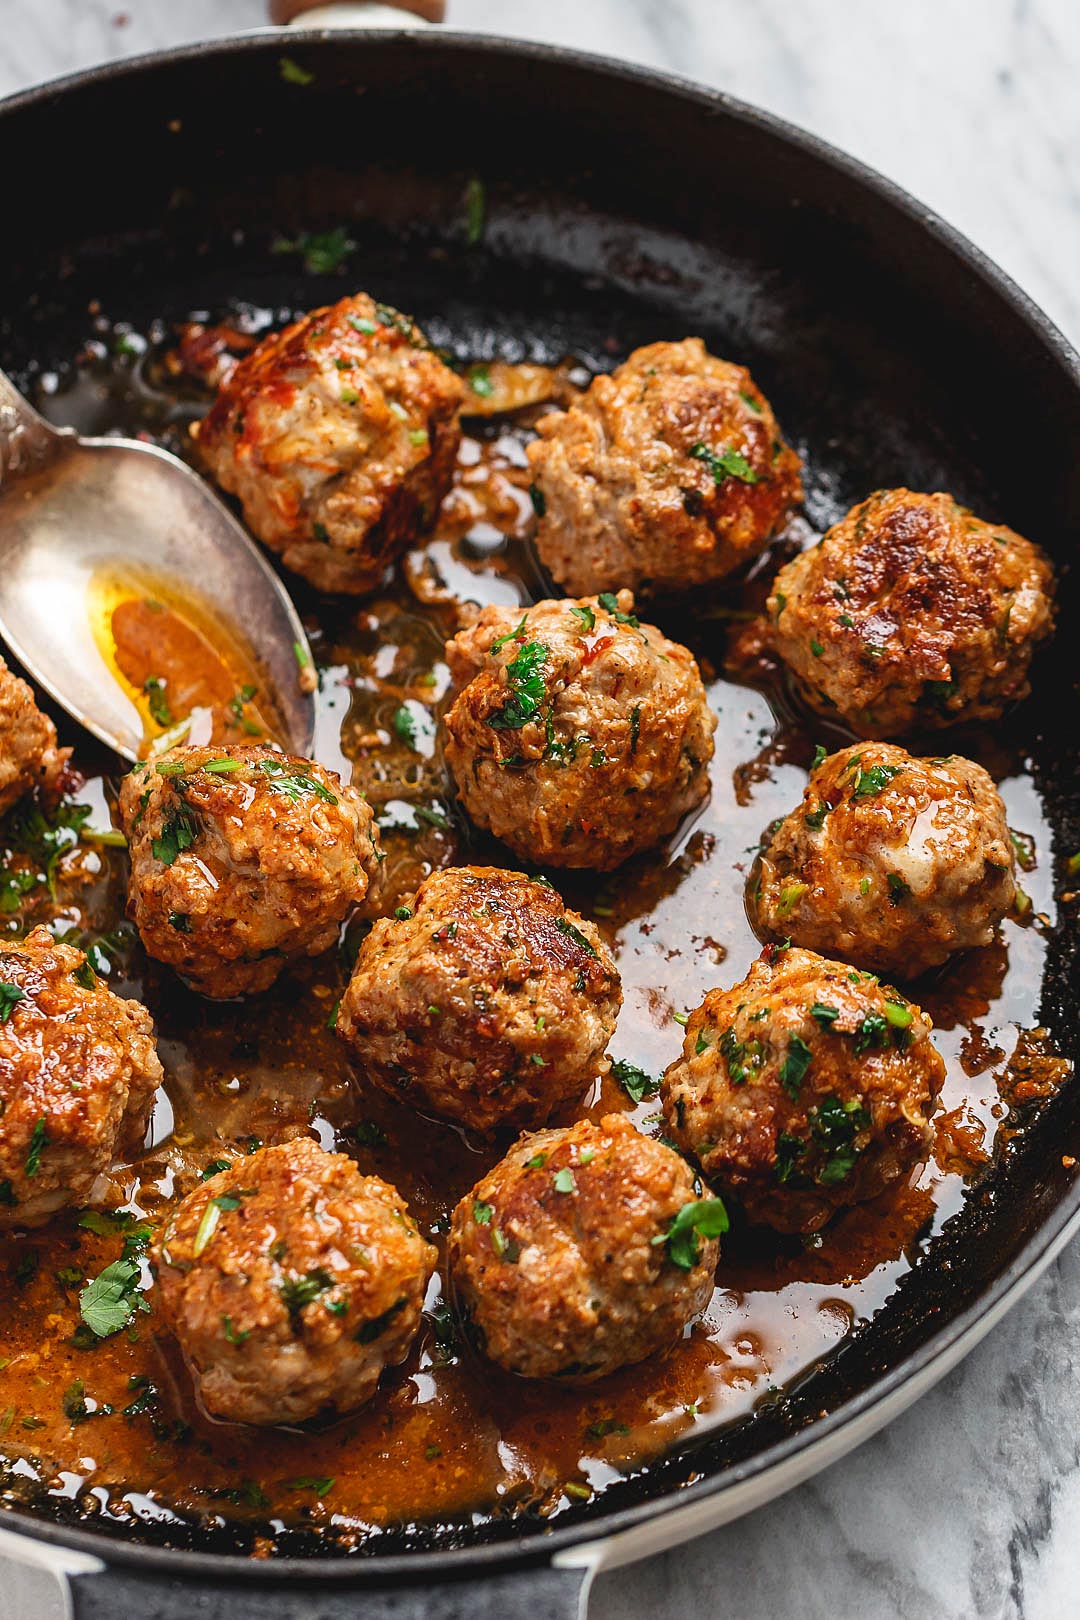 https://www.eatwell101.com/wp-content/uploads/2019/03/chicken-meatballs-recipe-2.jpg